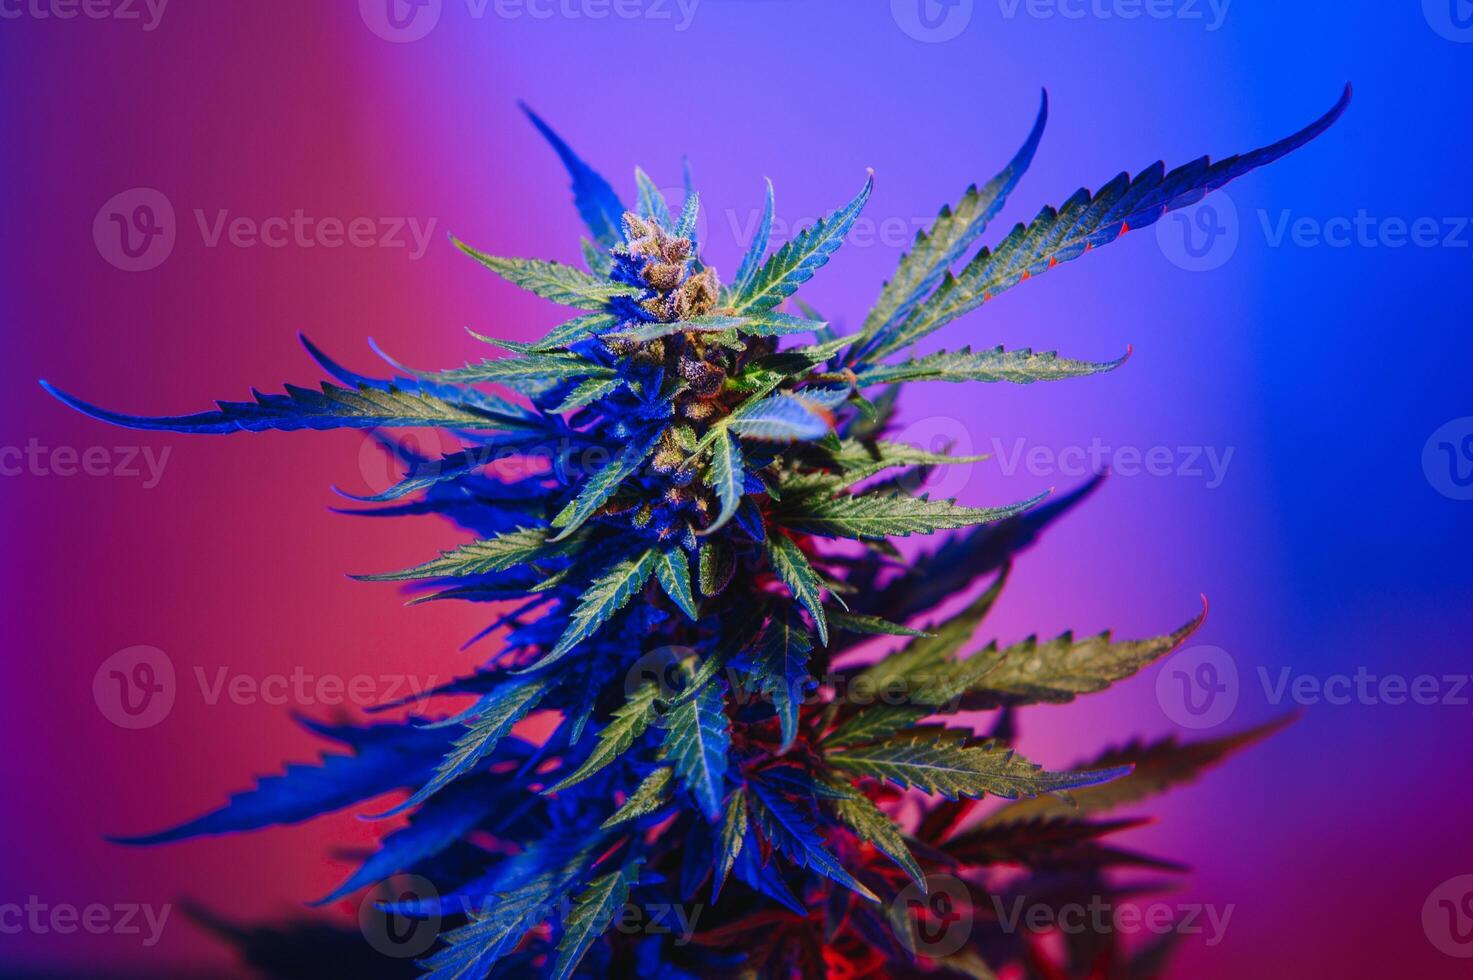 cannabis plant with big leaves and flowering bud. Medical Marijuana plant. Aesthetic look on agricultural strain of marijuana hemp photo